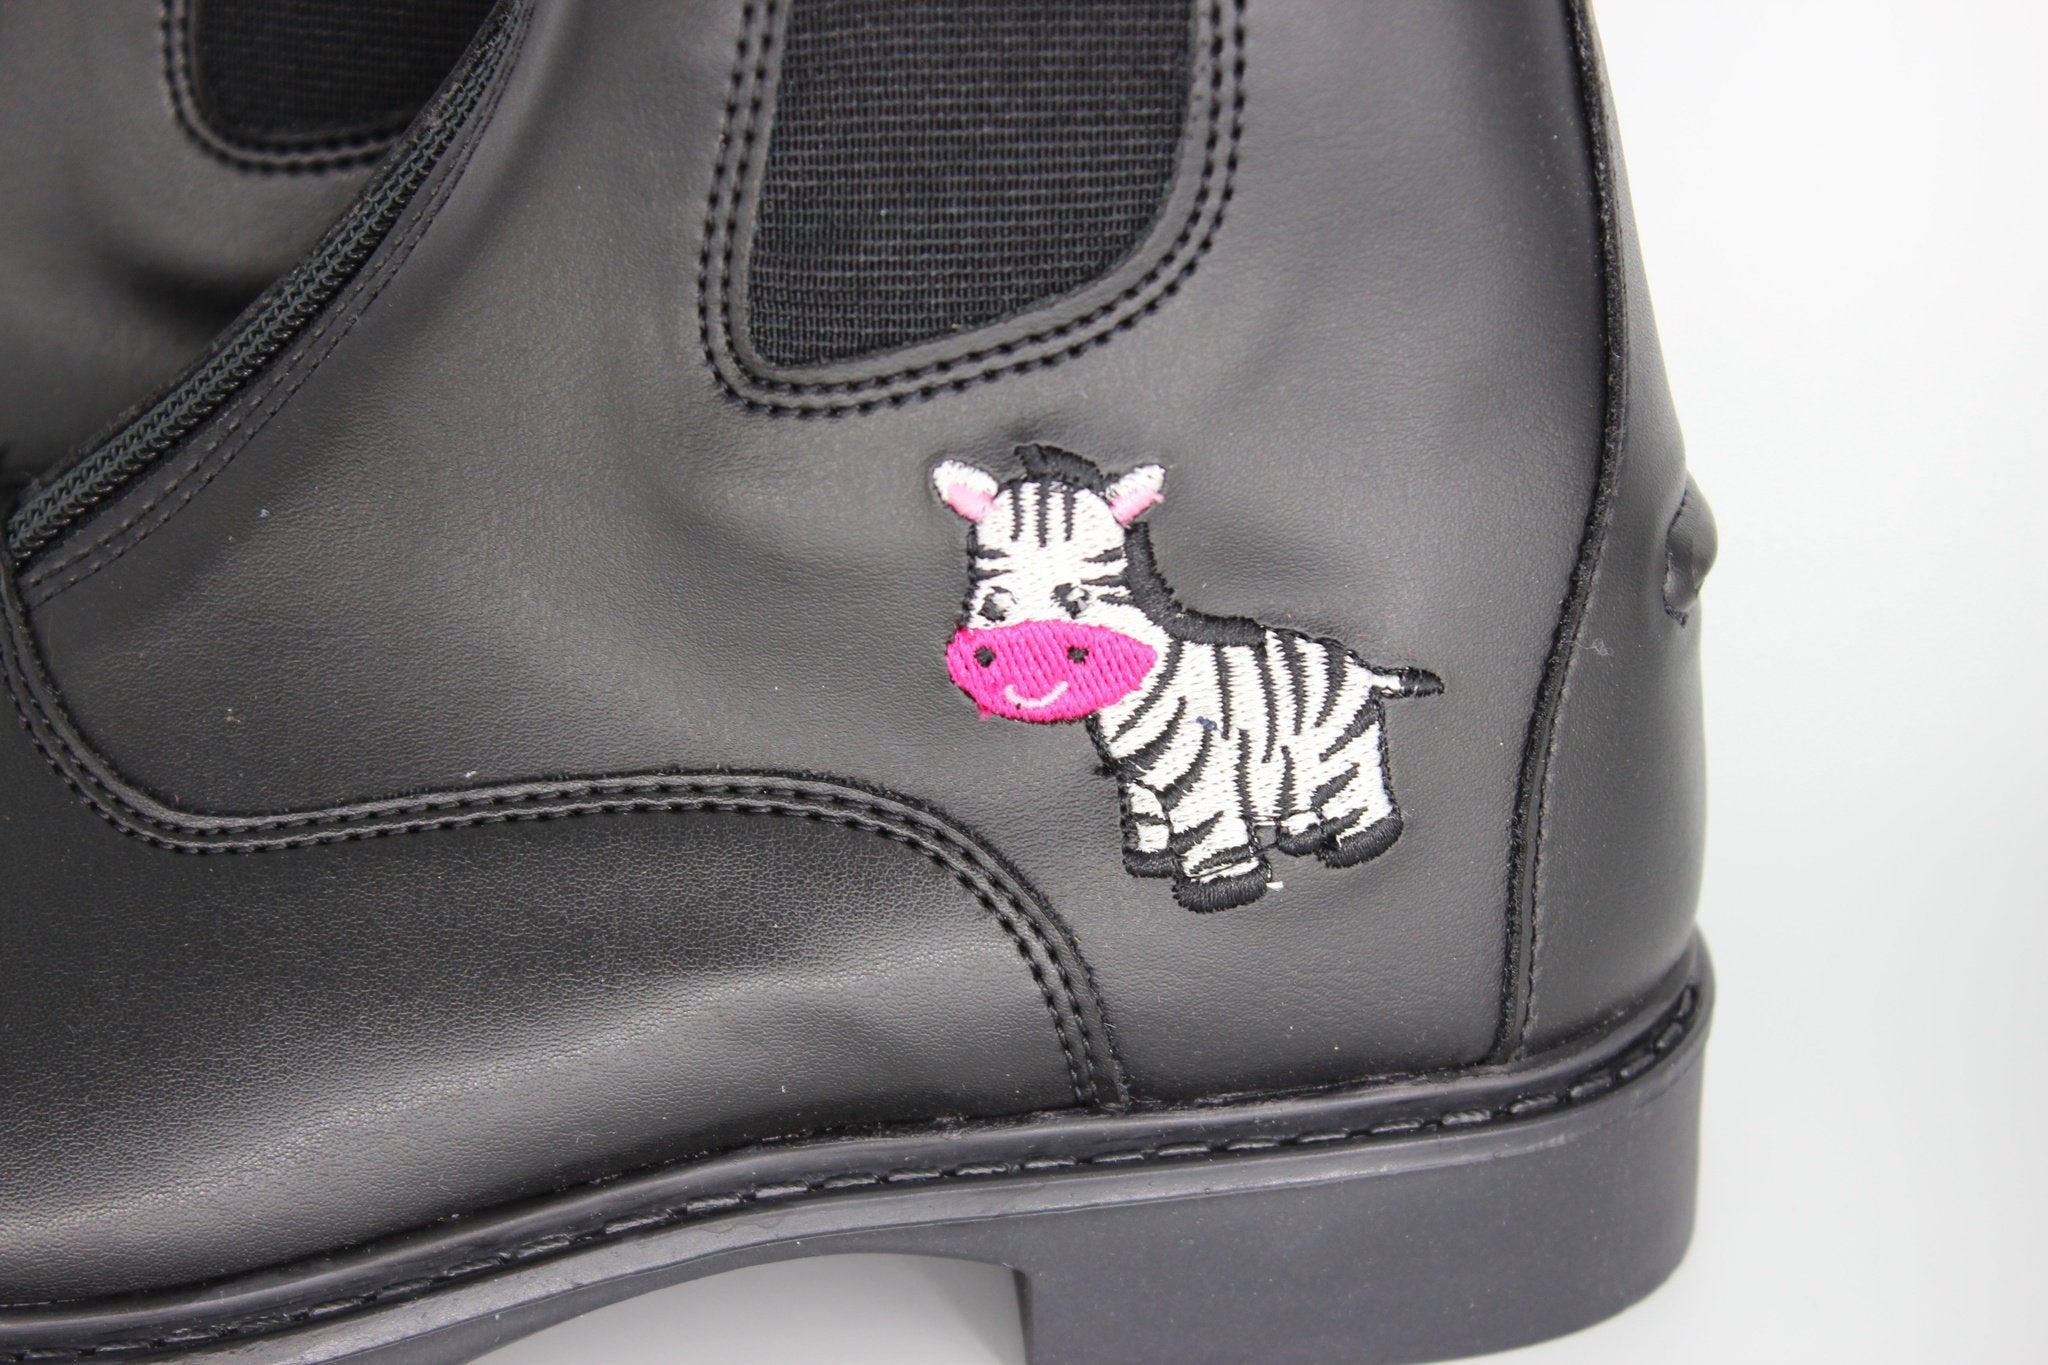 TuffRider Starter Zebra Paddock Boots for Children - Breeches.com